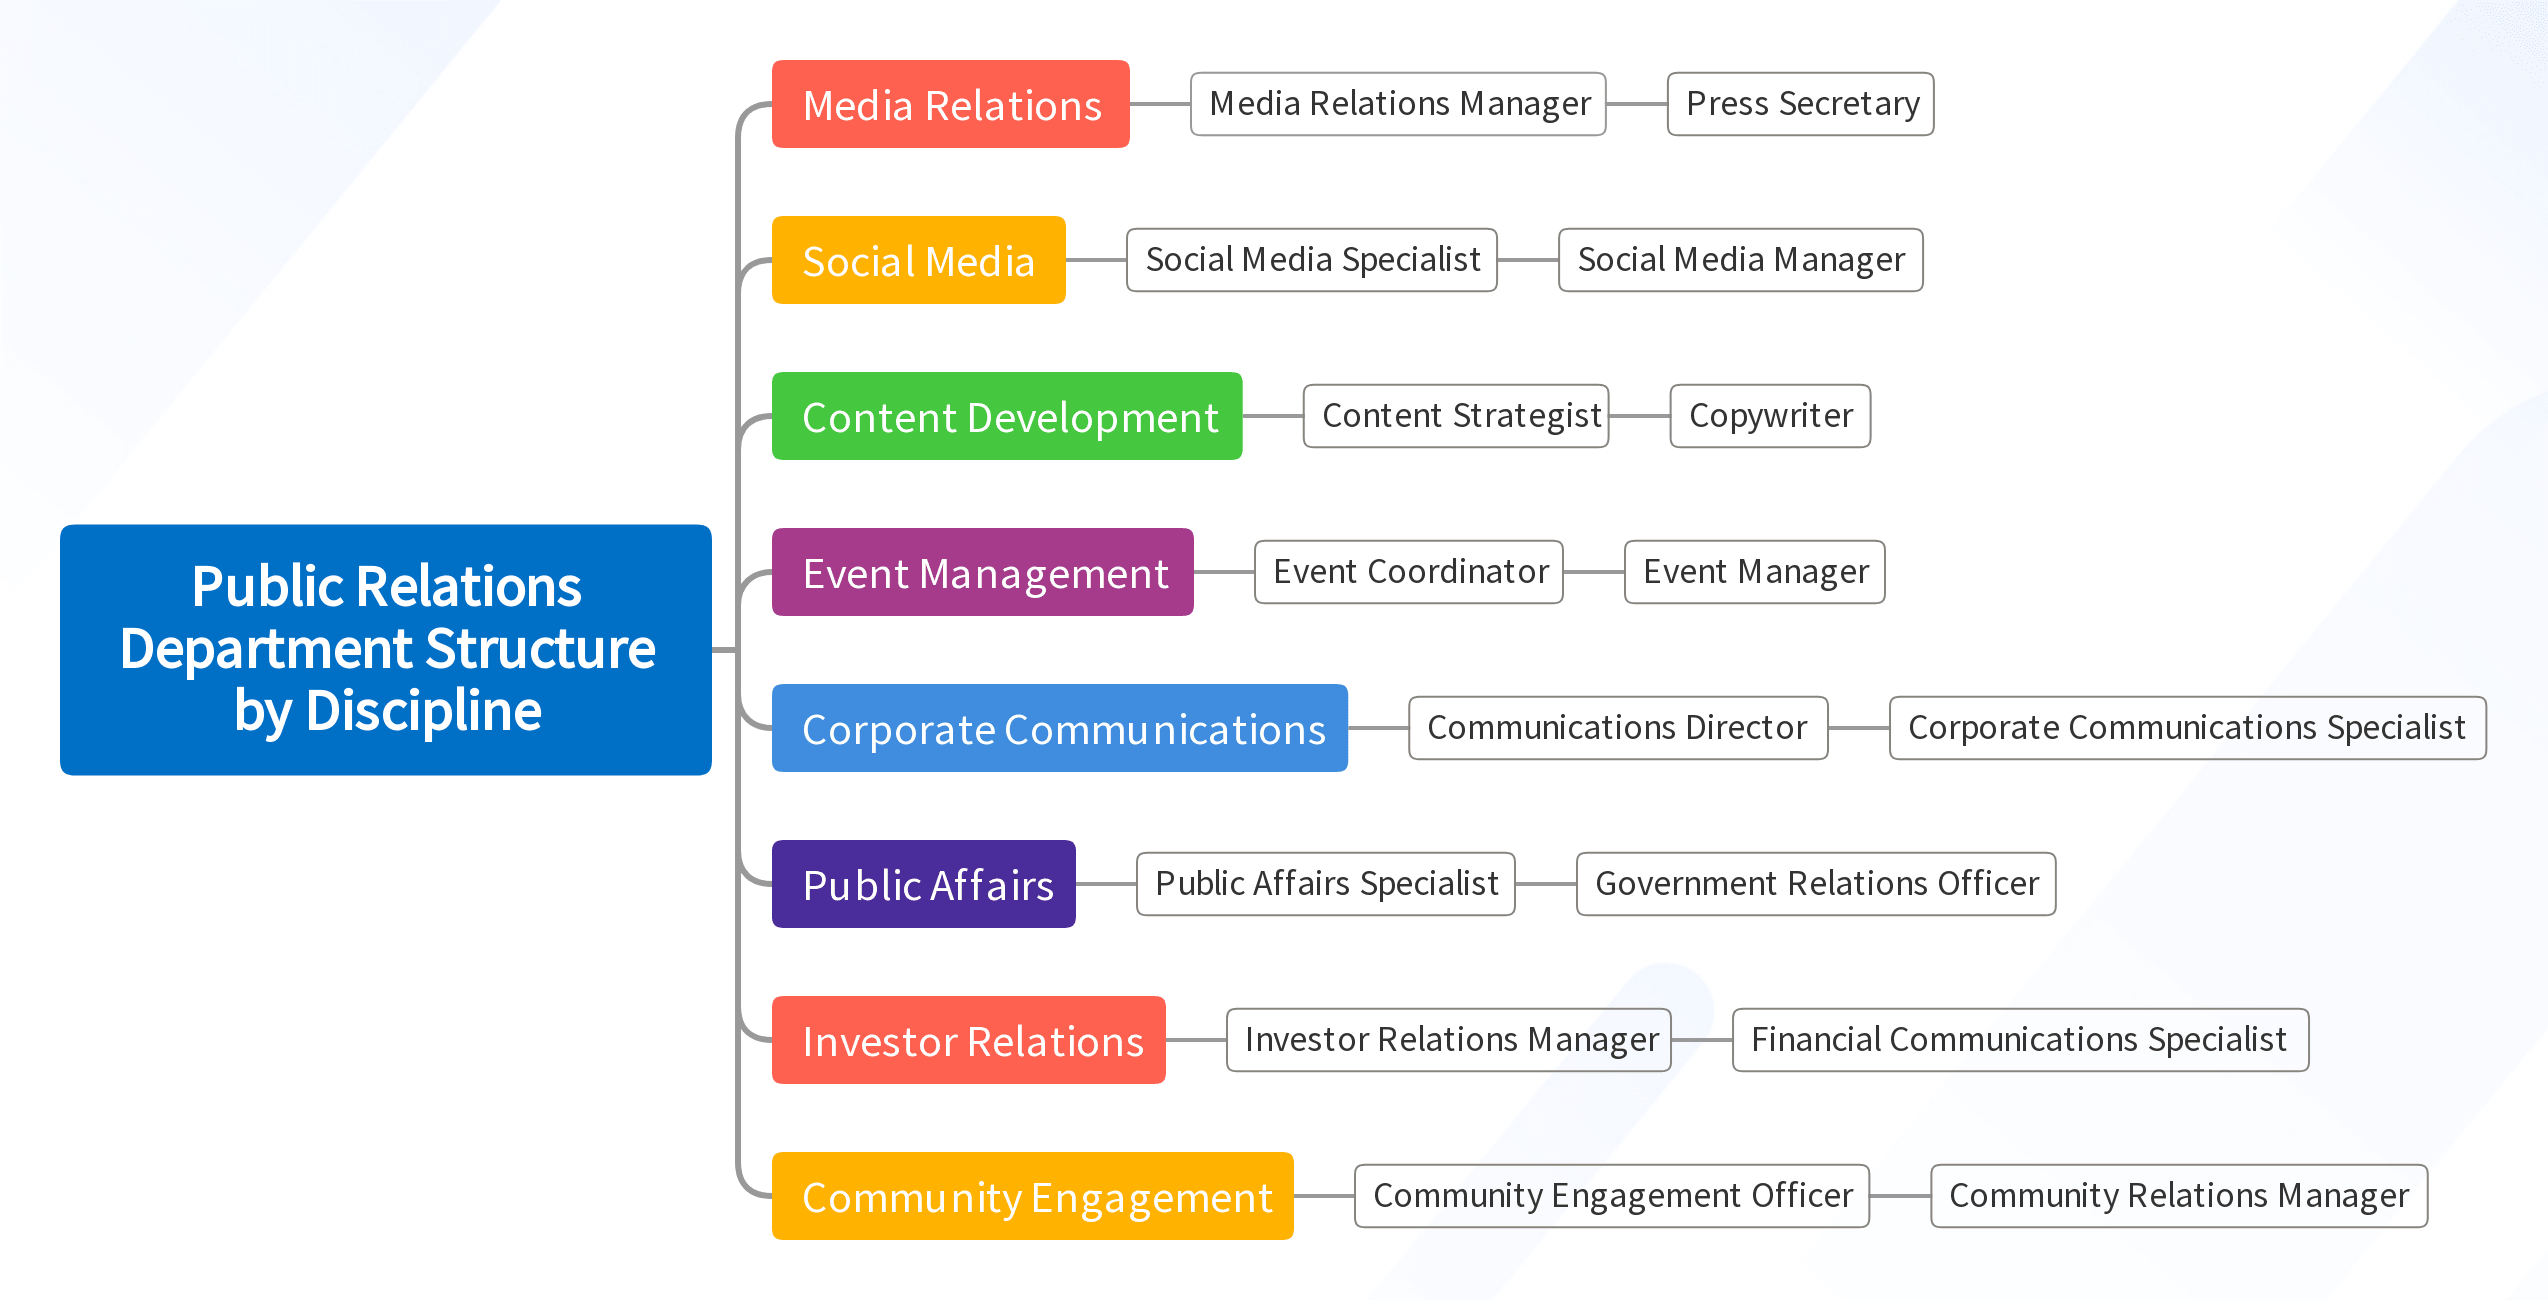 Public Relations Department Structure by Discipline